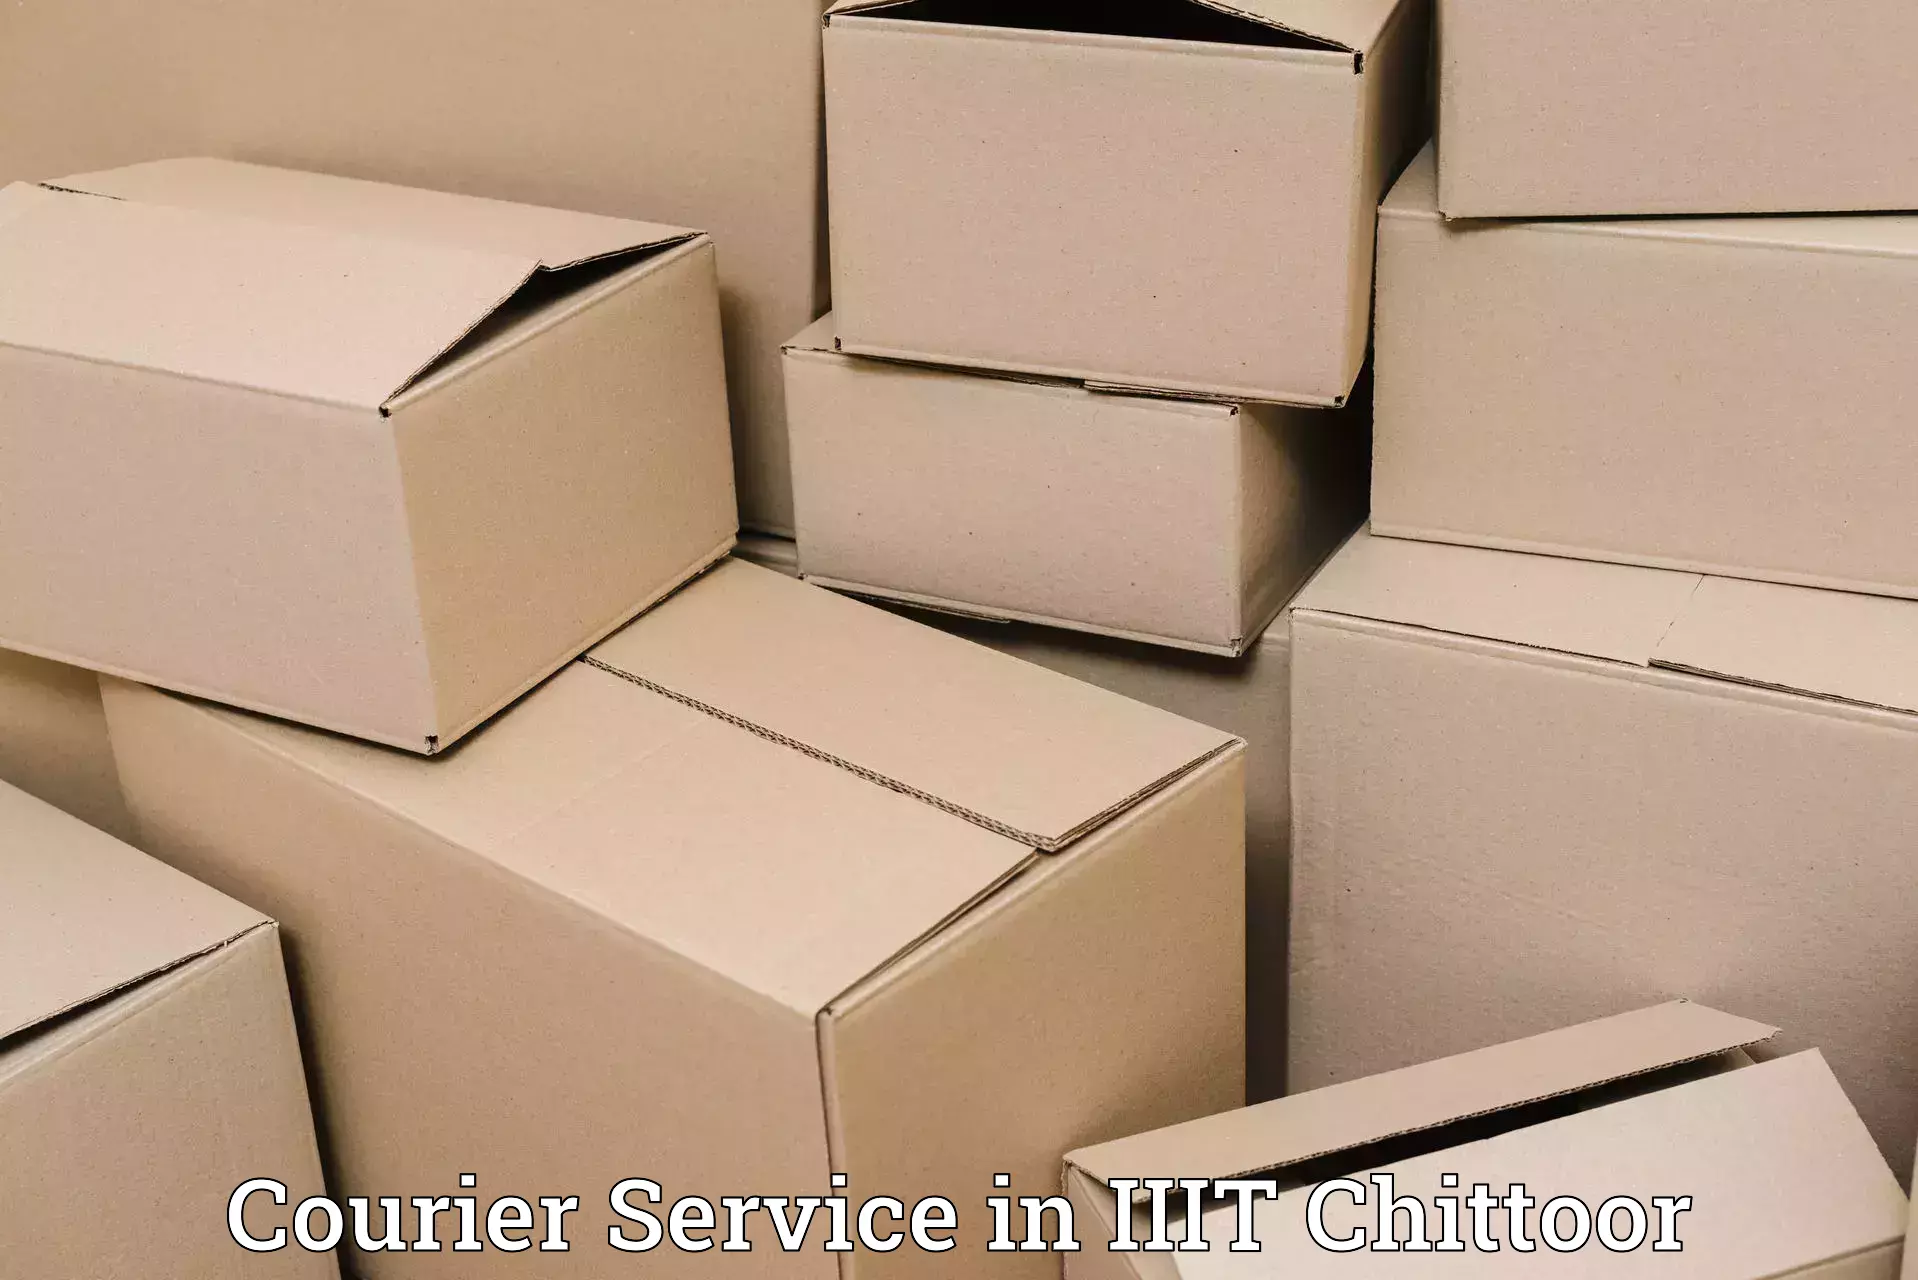 Supply chain efficiency in IIIT Chittoor